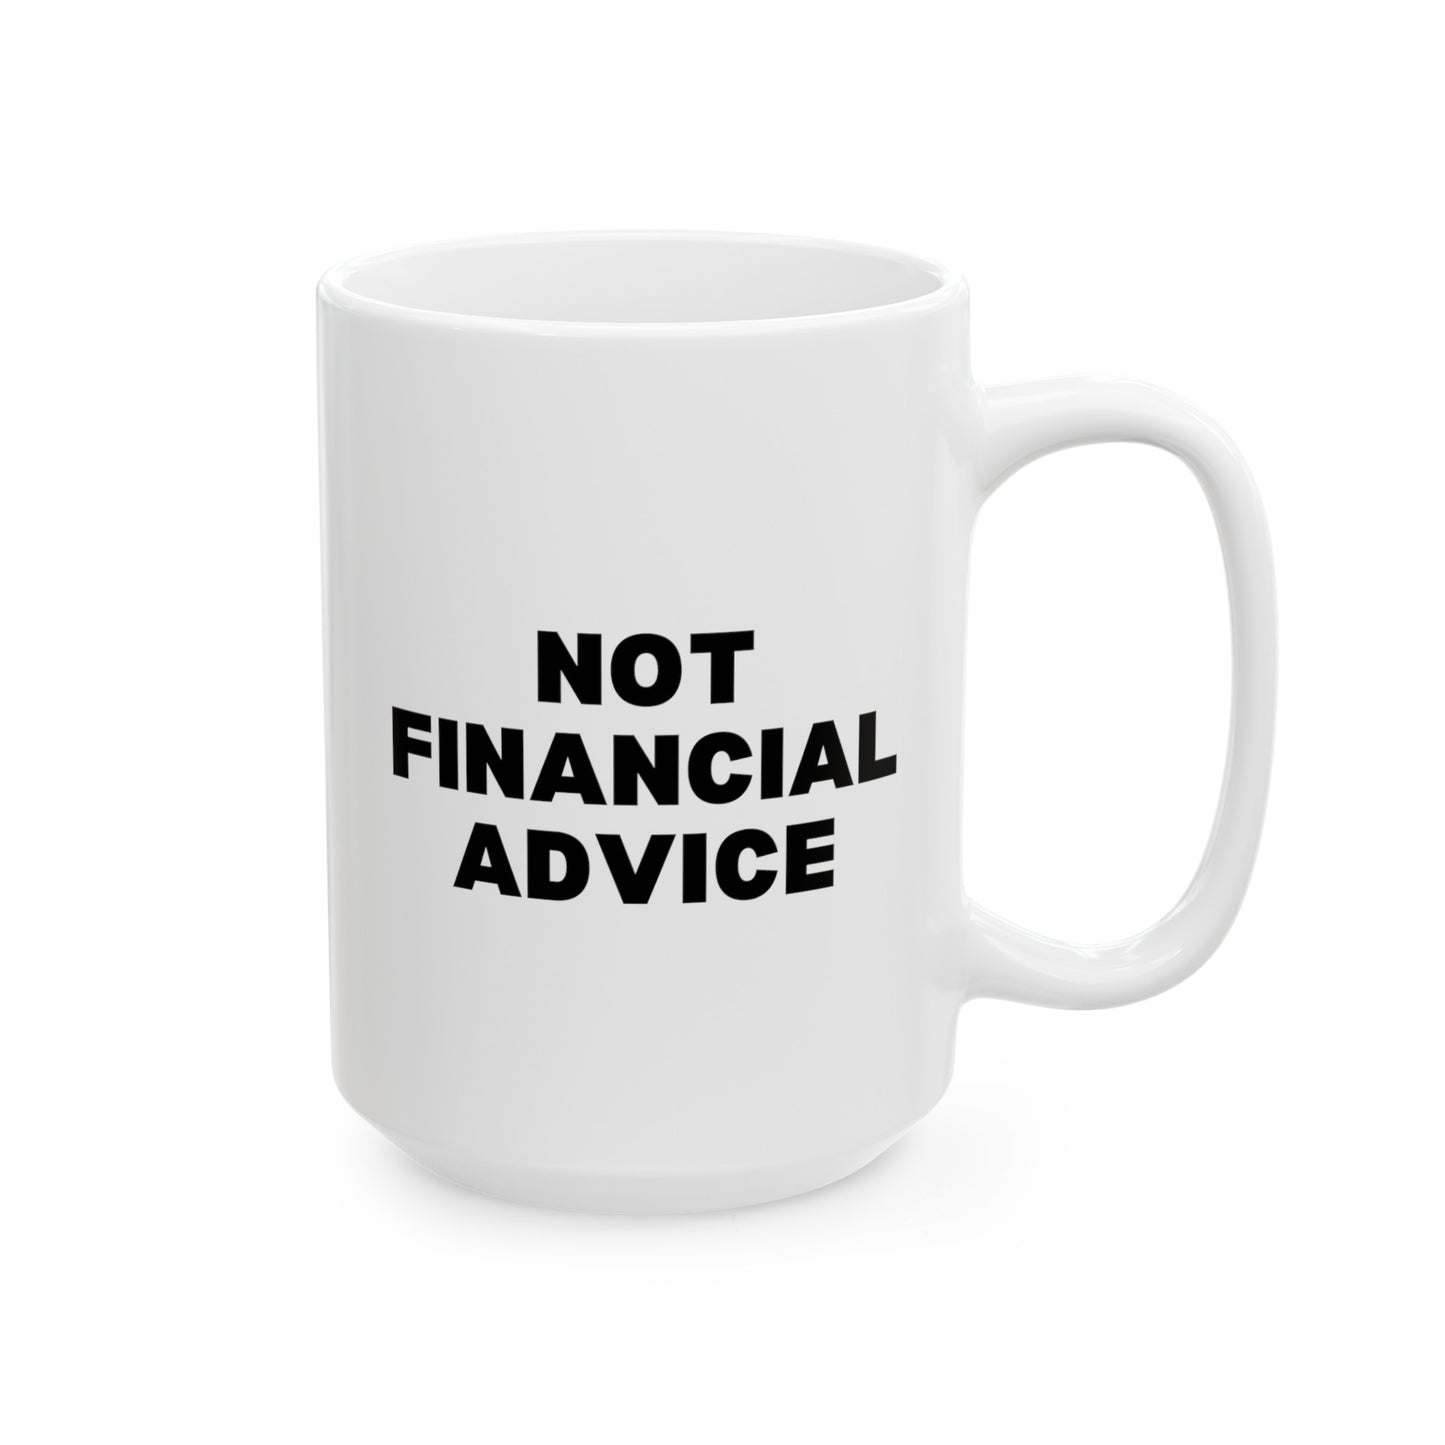 Not Financial Advice 15oz white funny large coffee mug gift for finance bro advisor specialist joke waveywares wavey wares wavywares wavy wares